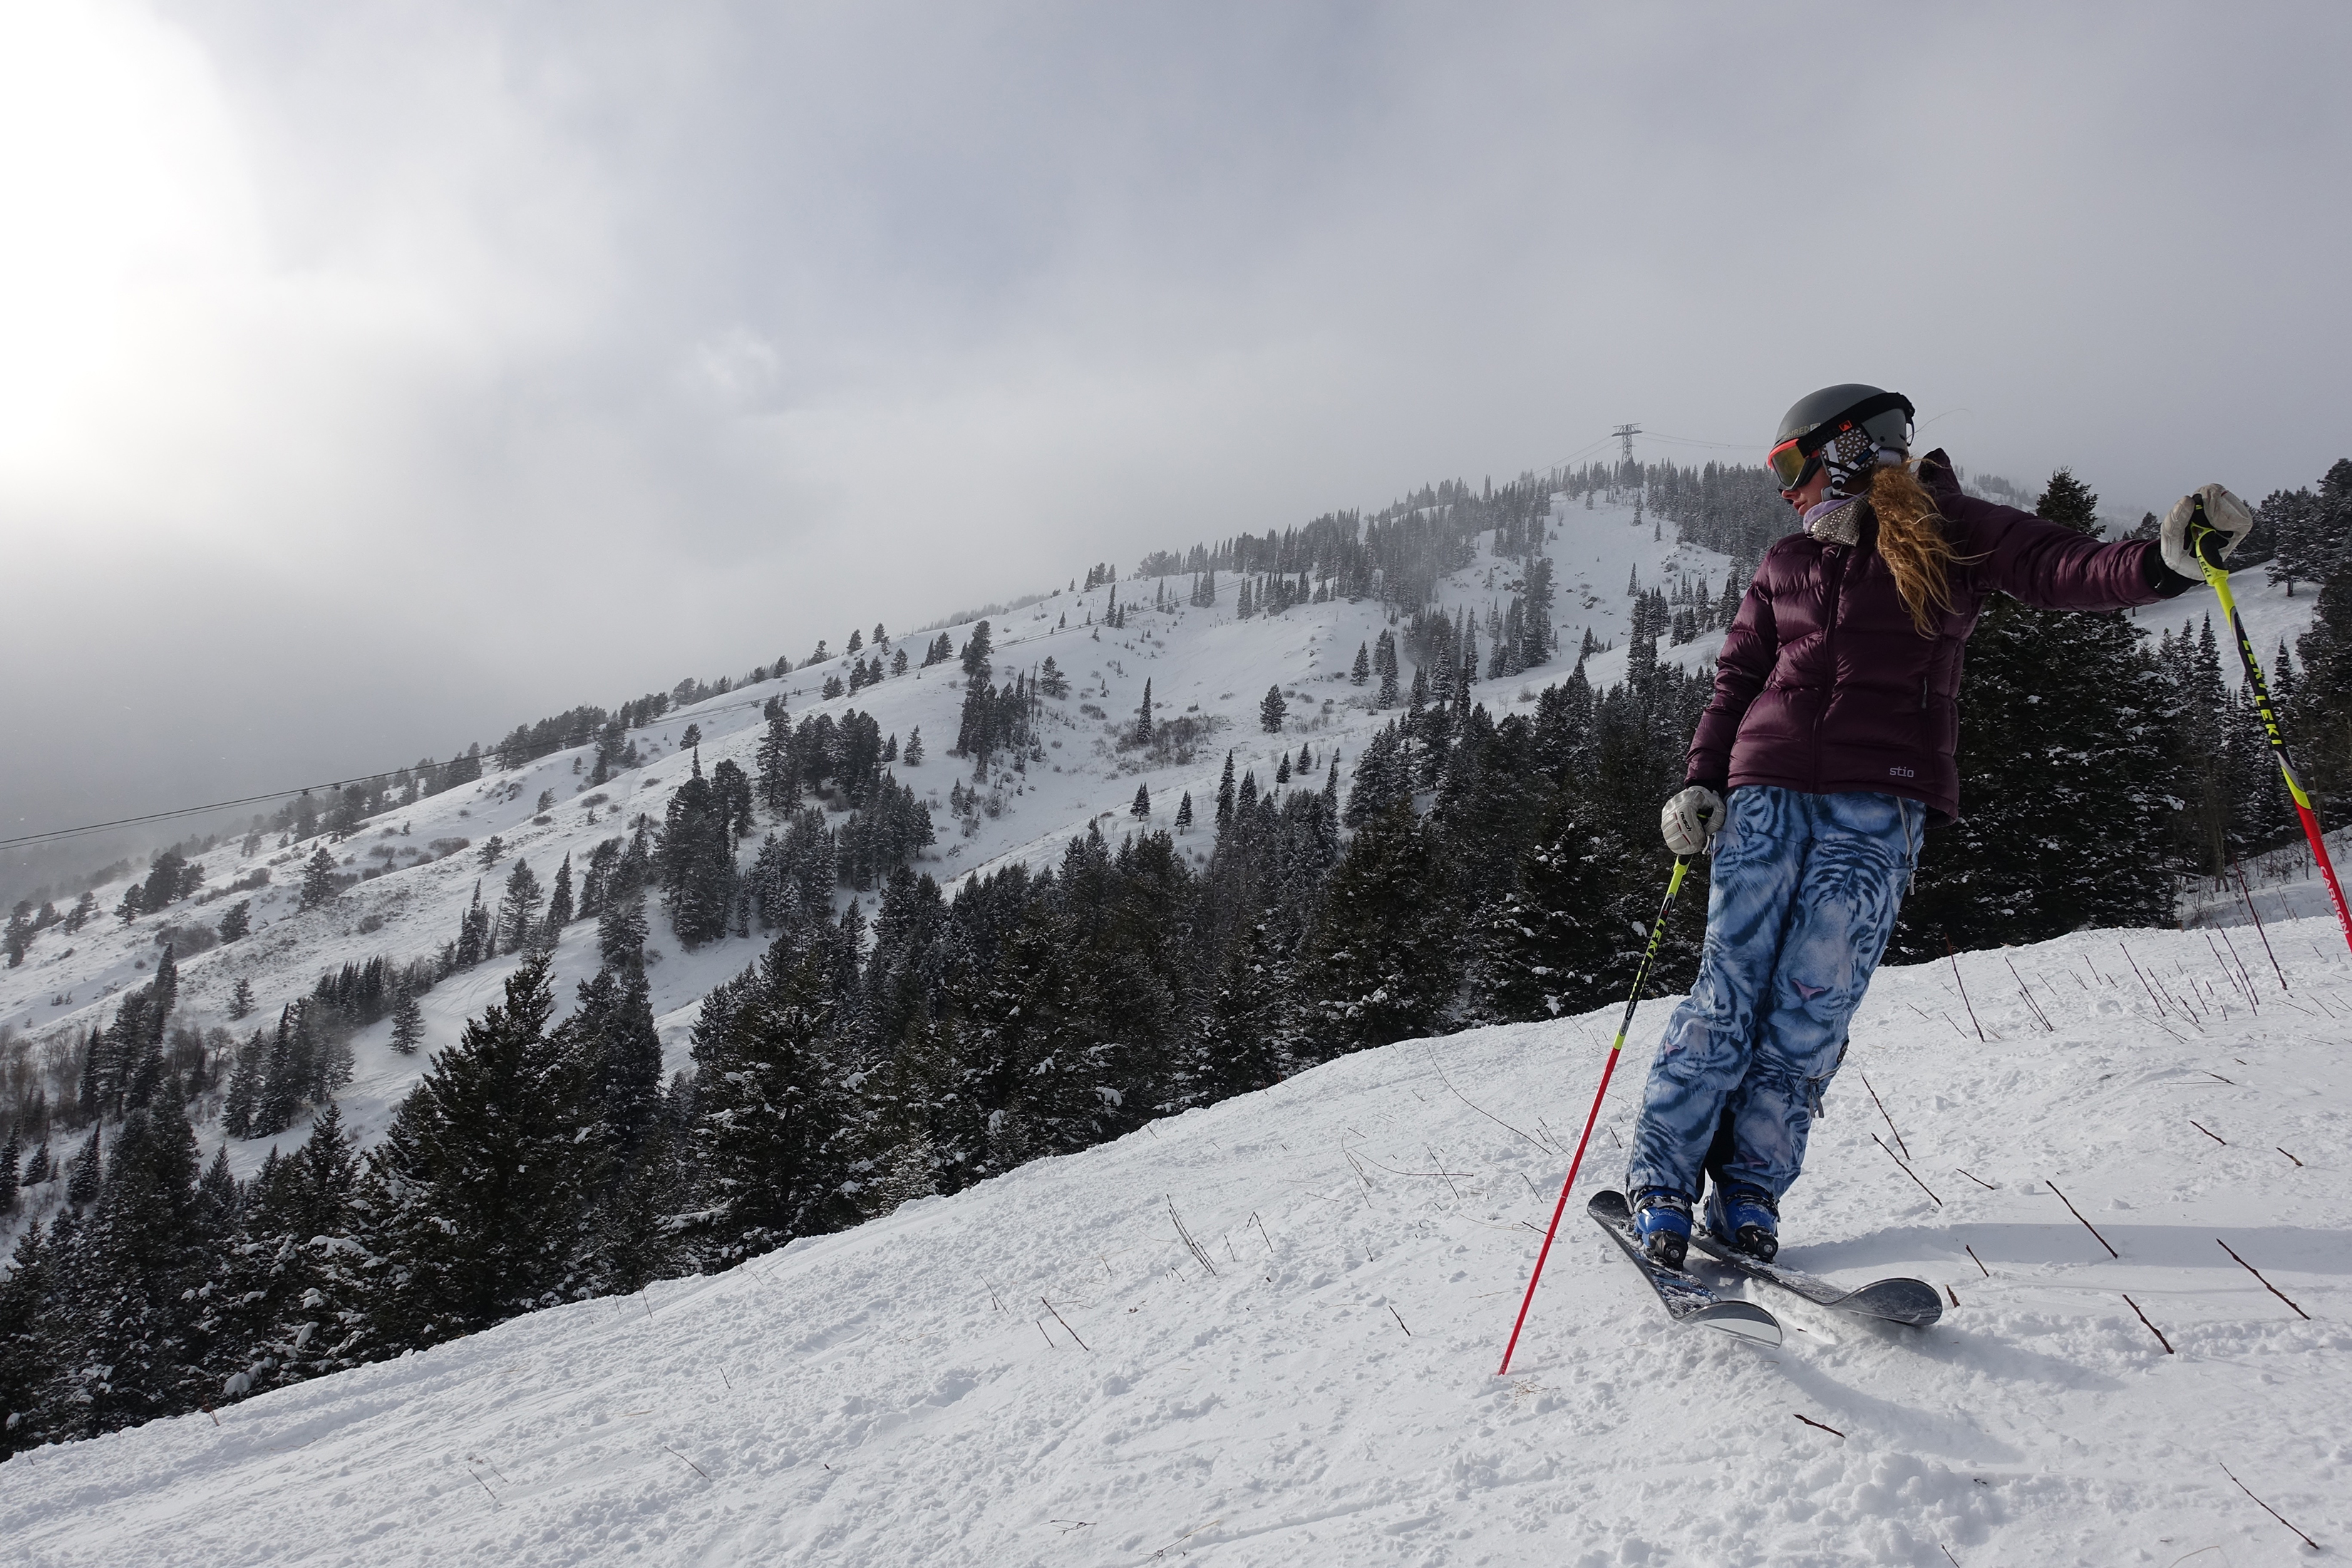 U.S. Ski Team member Resi Stiegler taking in the view on the lower mountain.